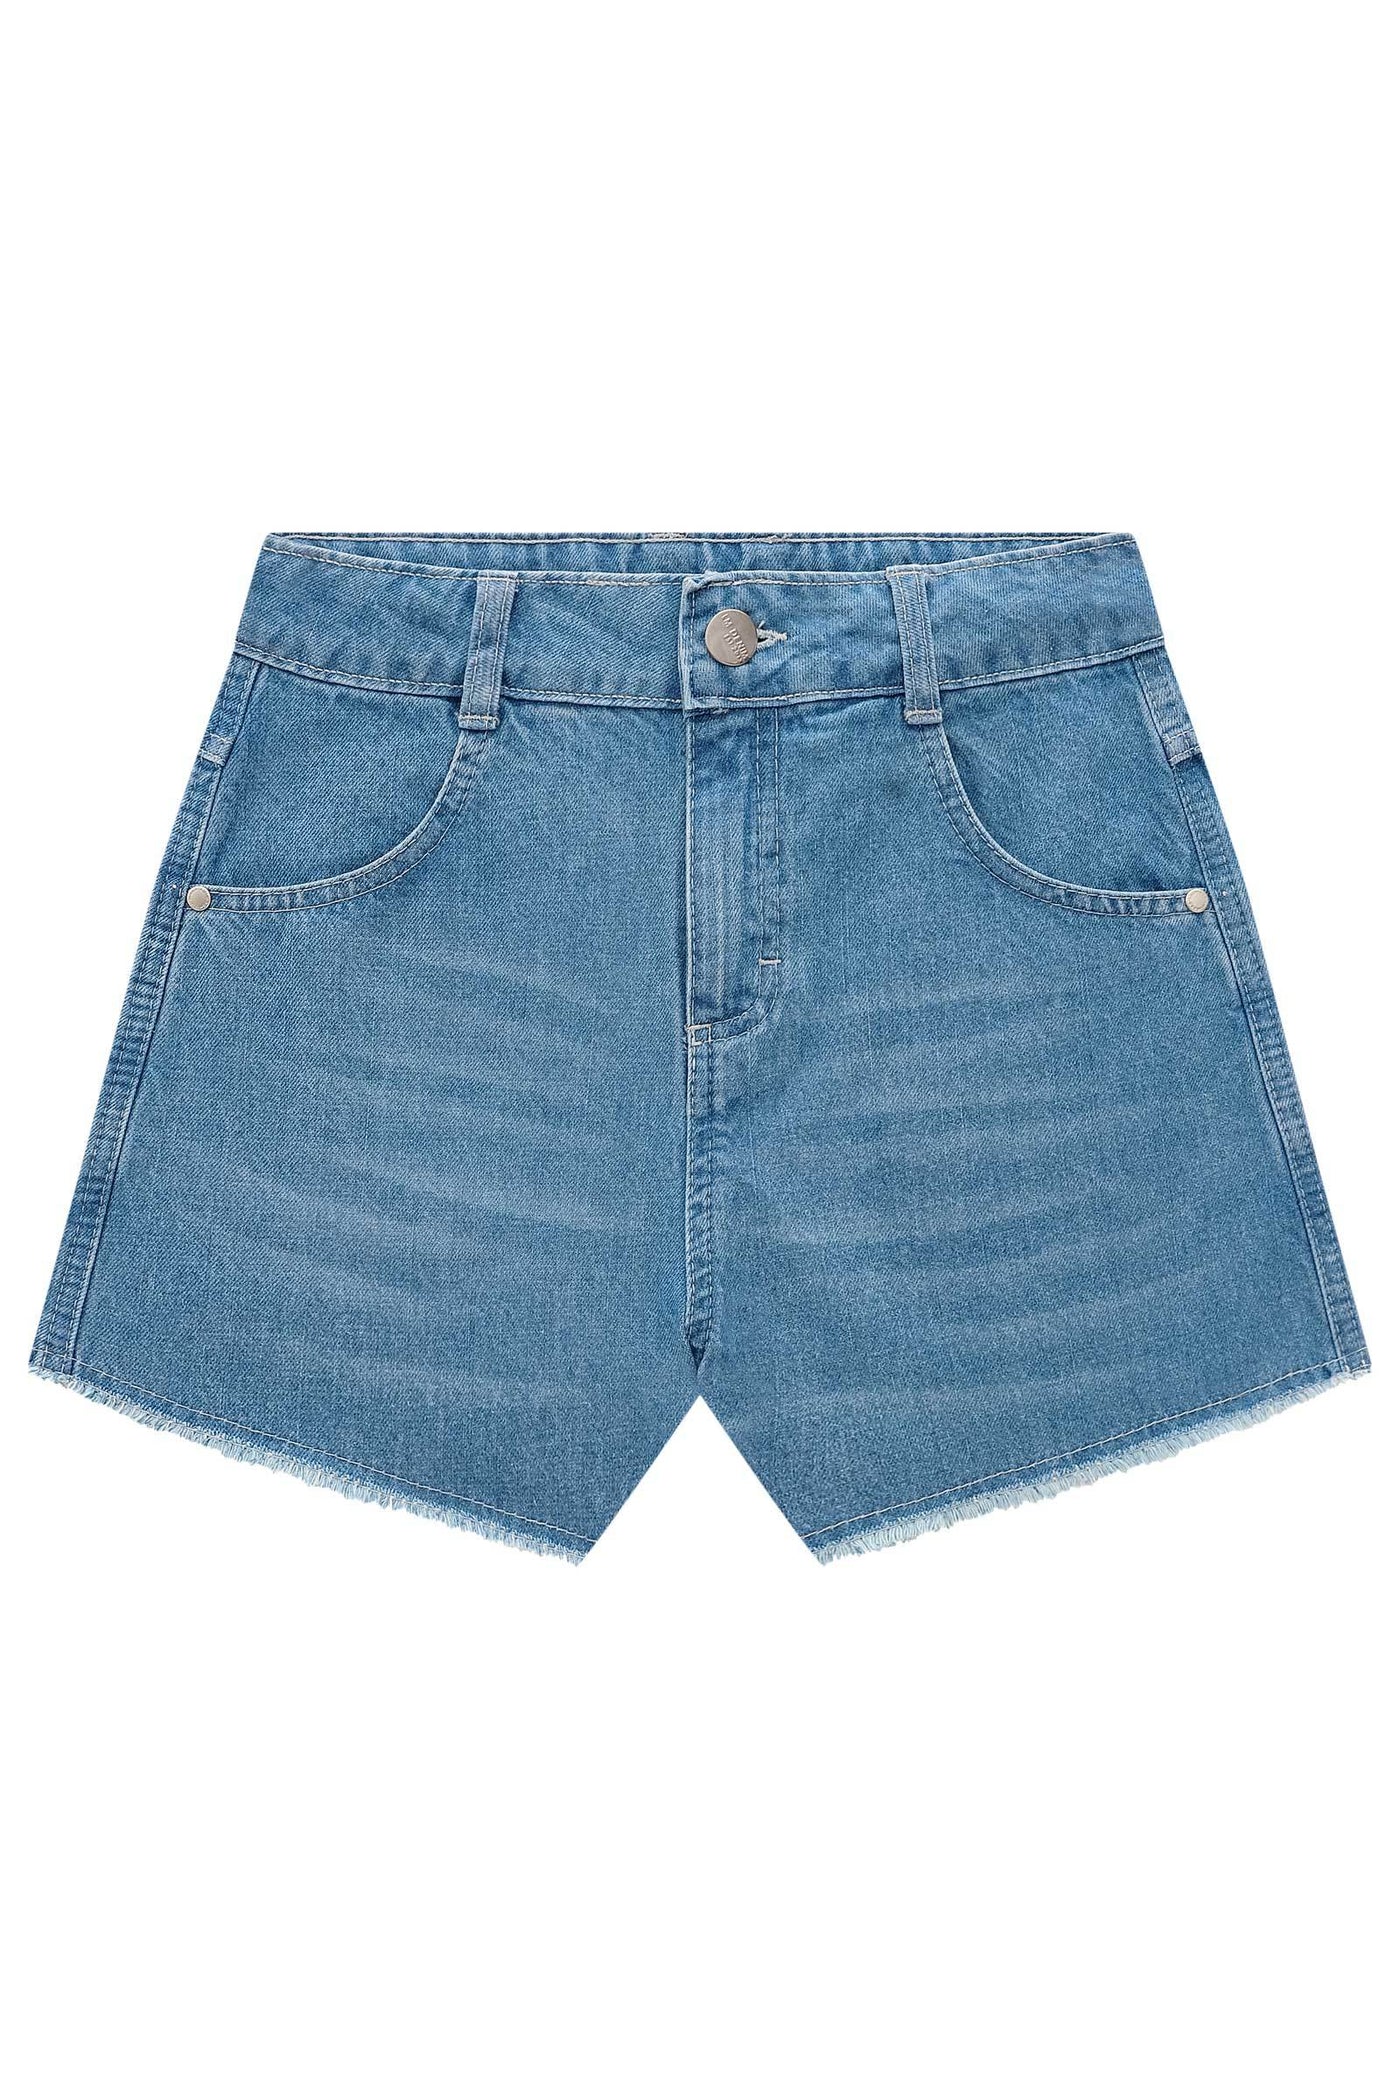 Shorts em Jeans Arkansas 74624 Lilimoon